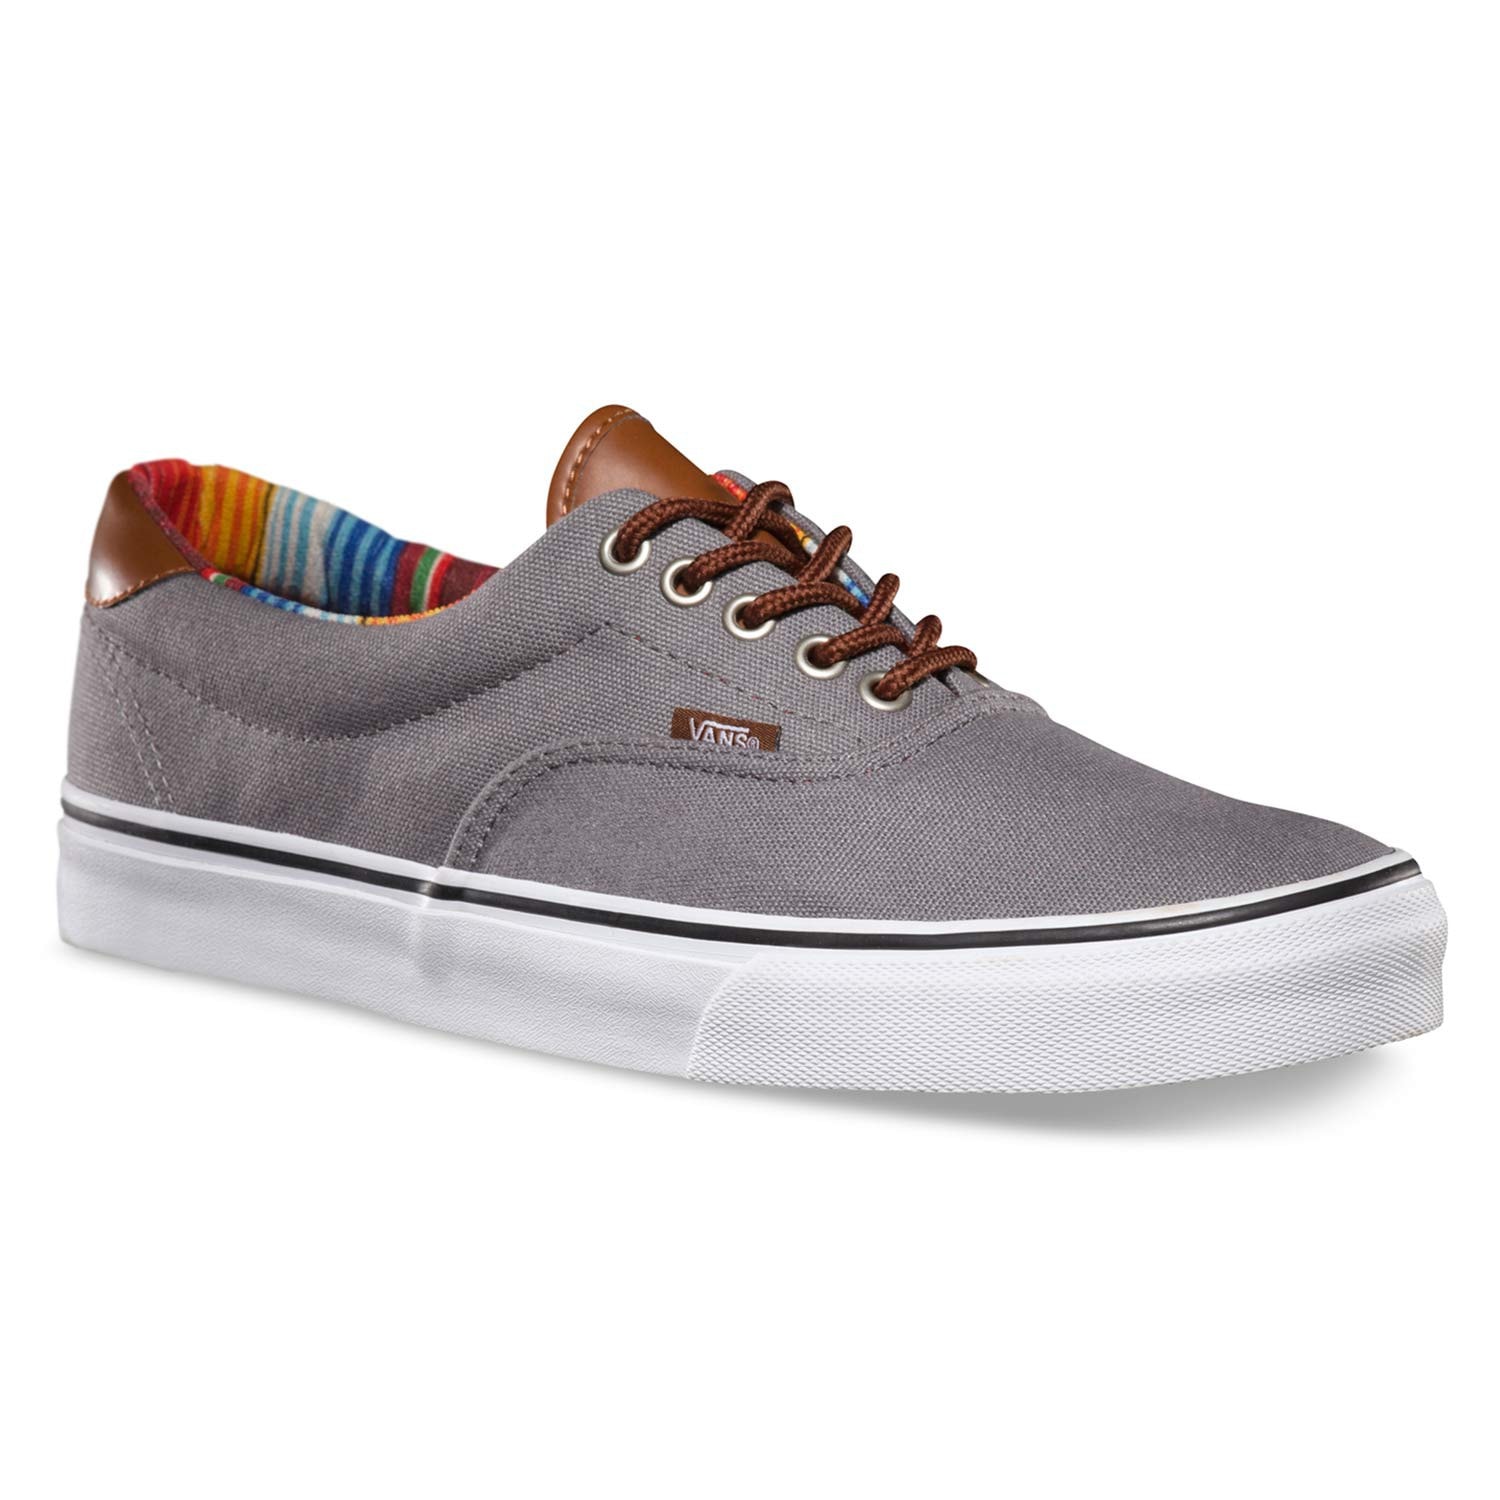 Sneakers Vans Era 59 grey/multi Snowboard Zezula